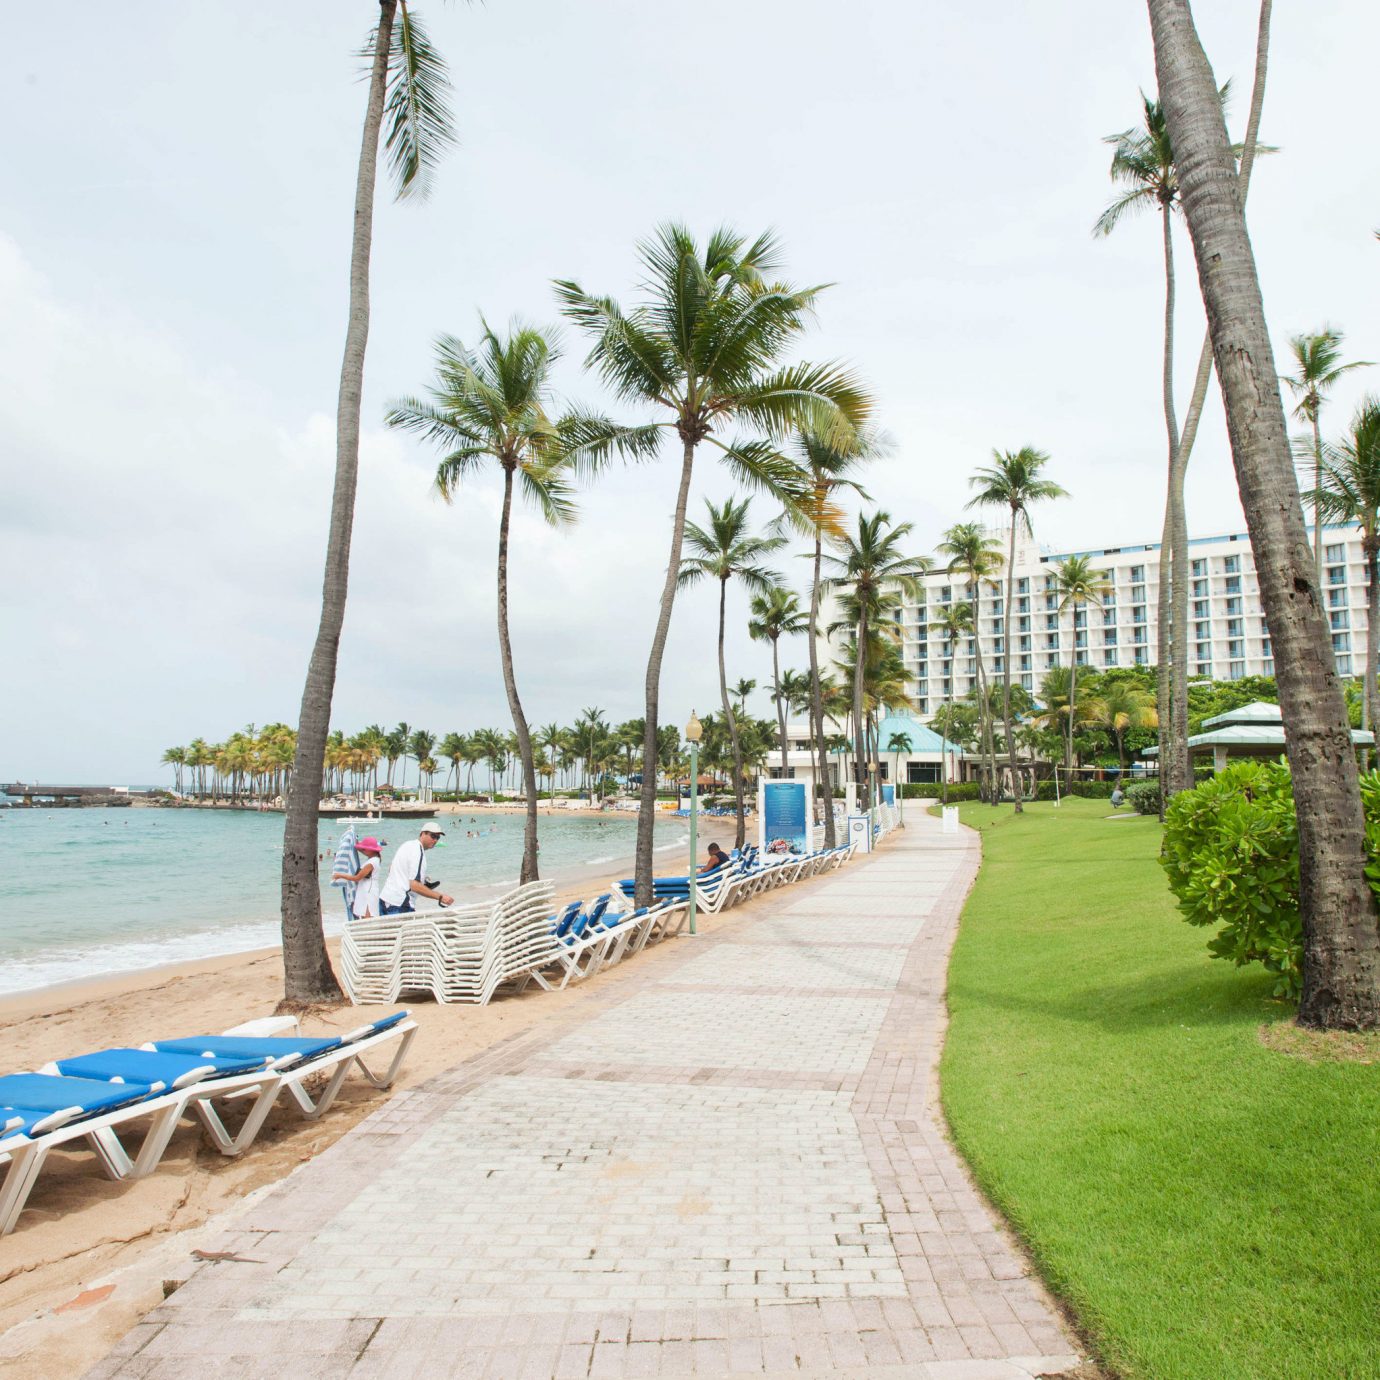 sky tree ground walkway Beach Resort boardwalk arecales palm Coast caribbean plant Sea shore lined